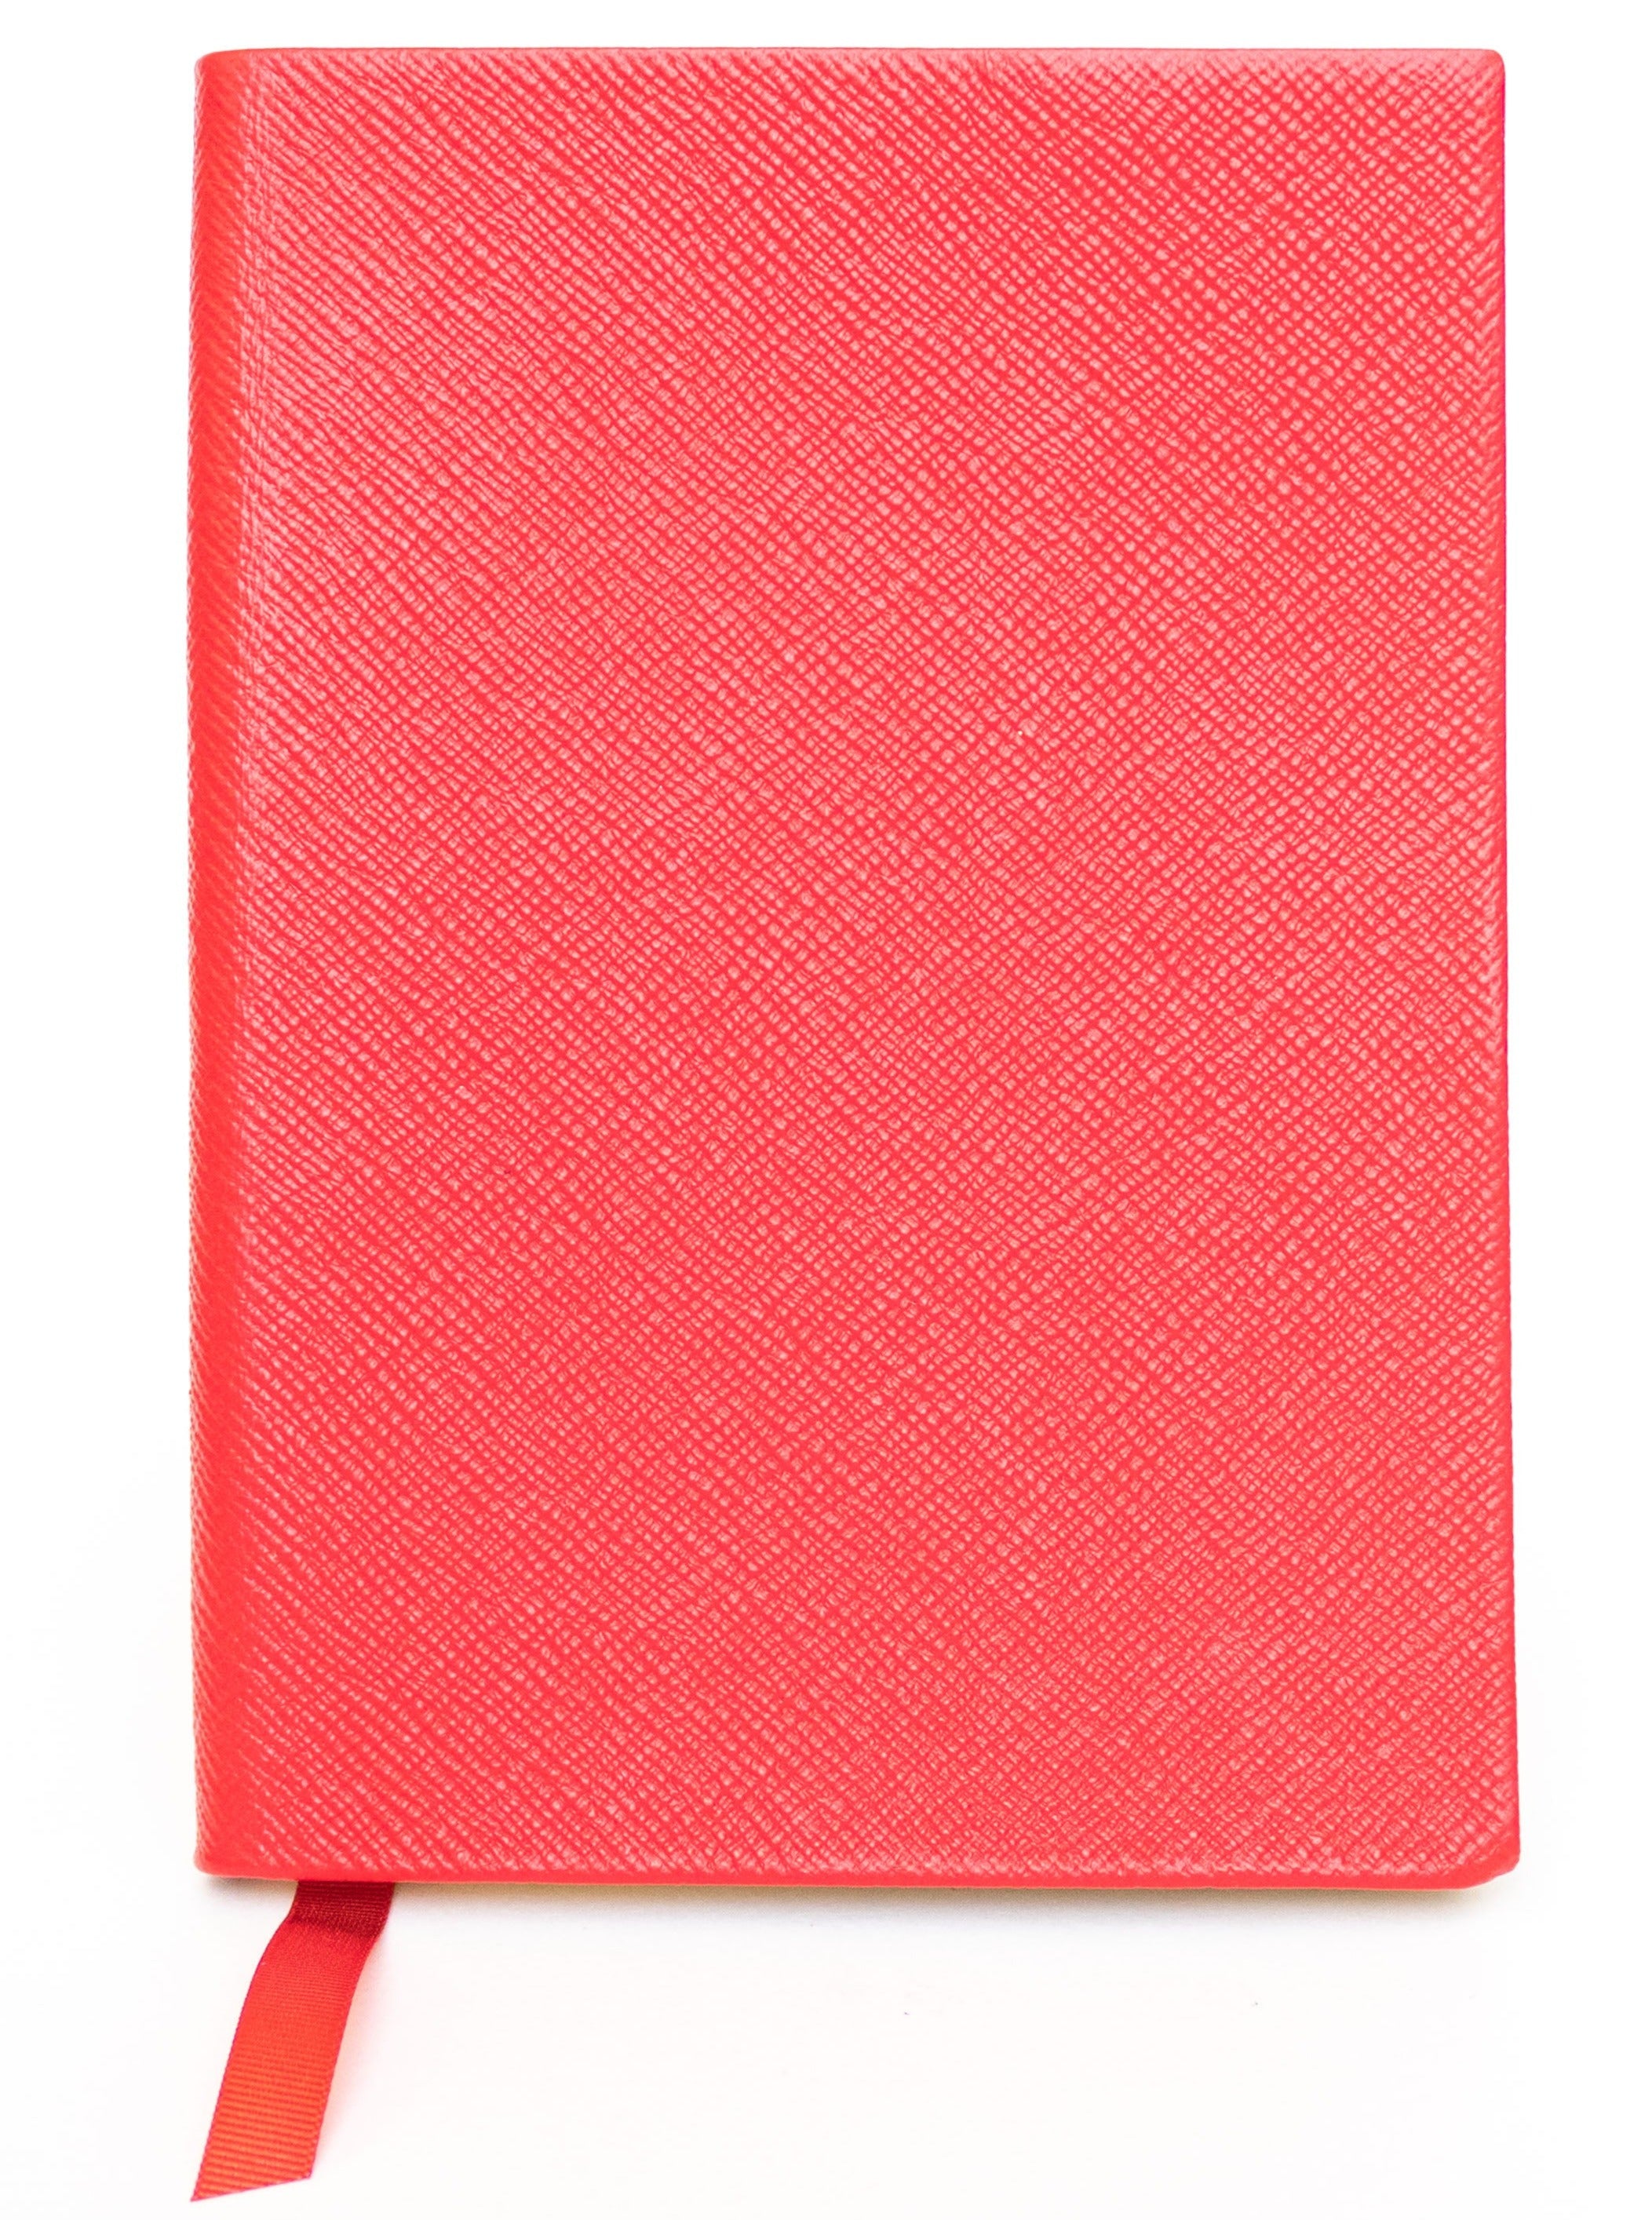 Smythson Soho Notebook Red - Decree Co. 